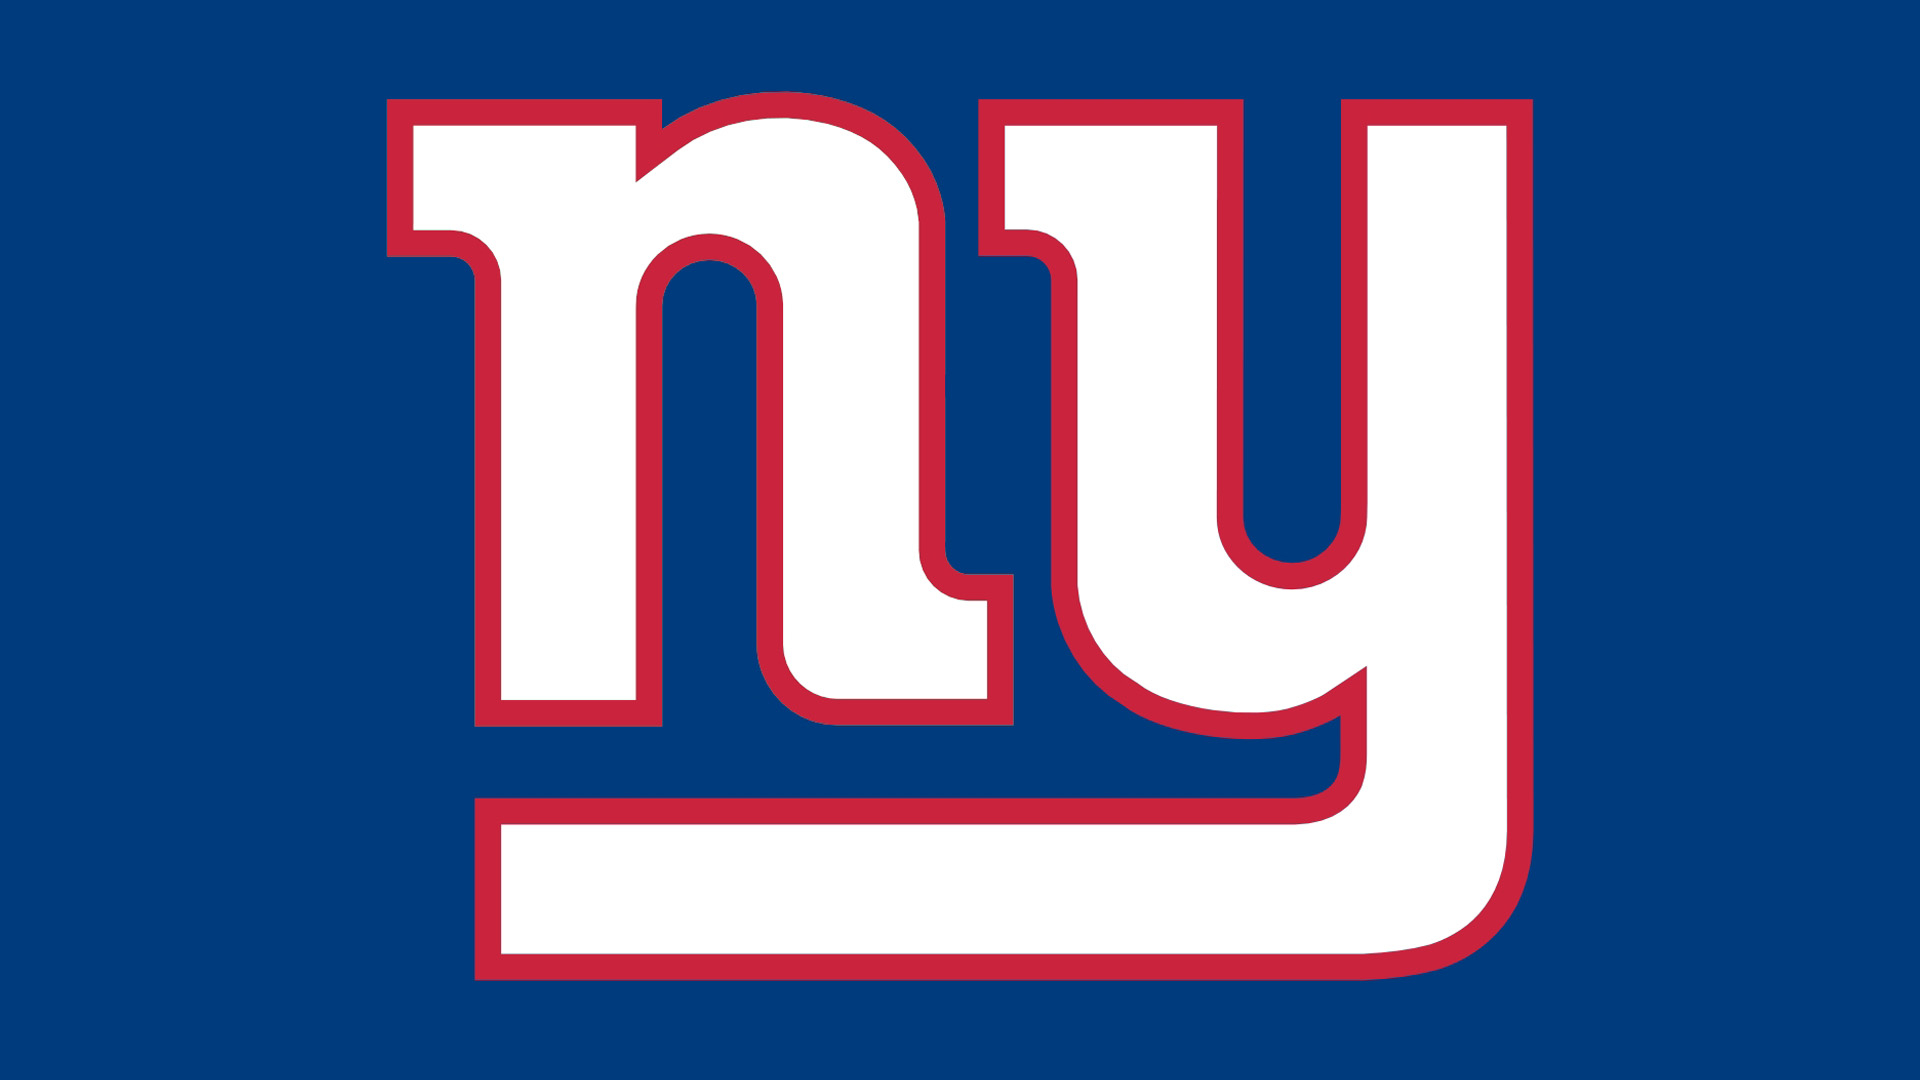 1920x1080 NY Giants Logo Wallpapers Top Free NY Giants Logo Backgrounds